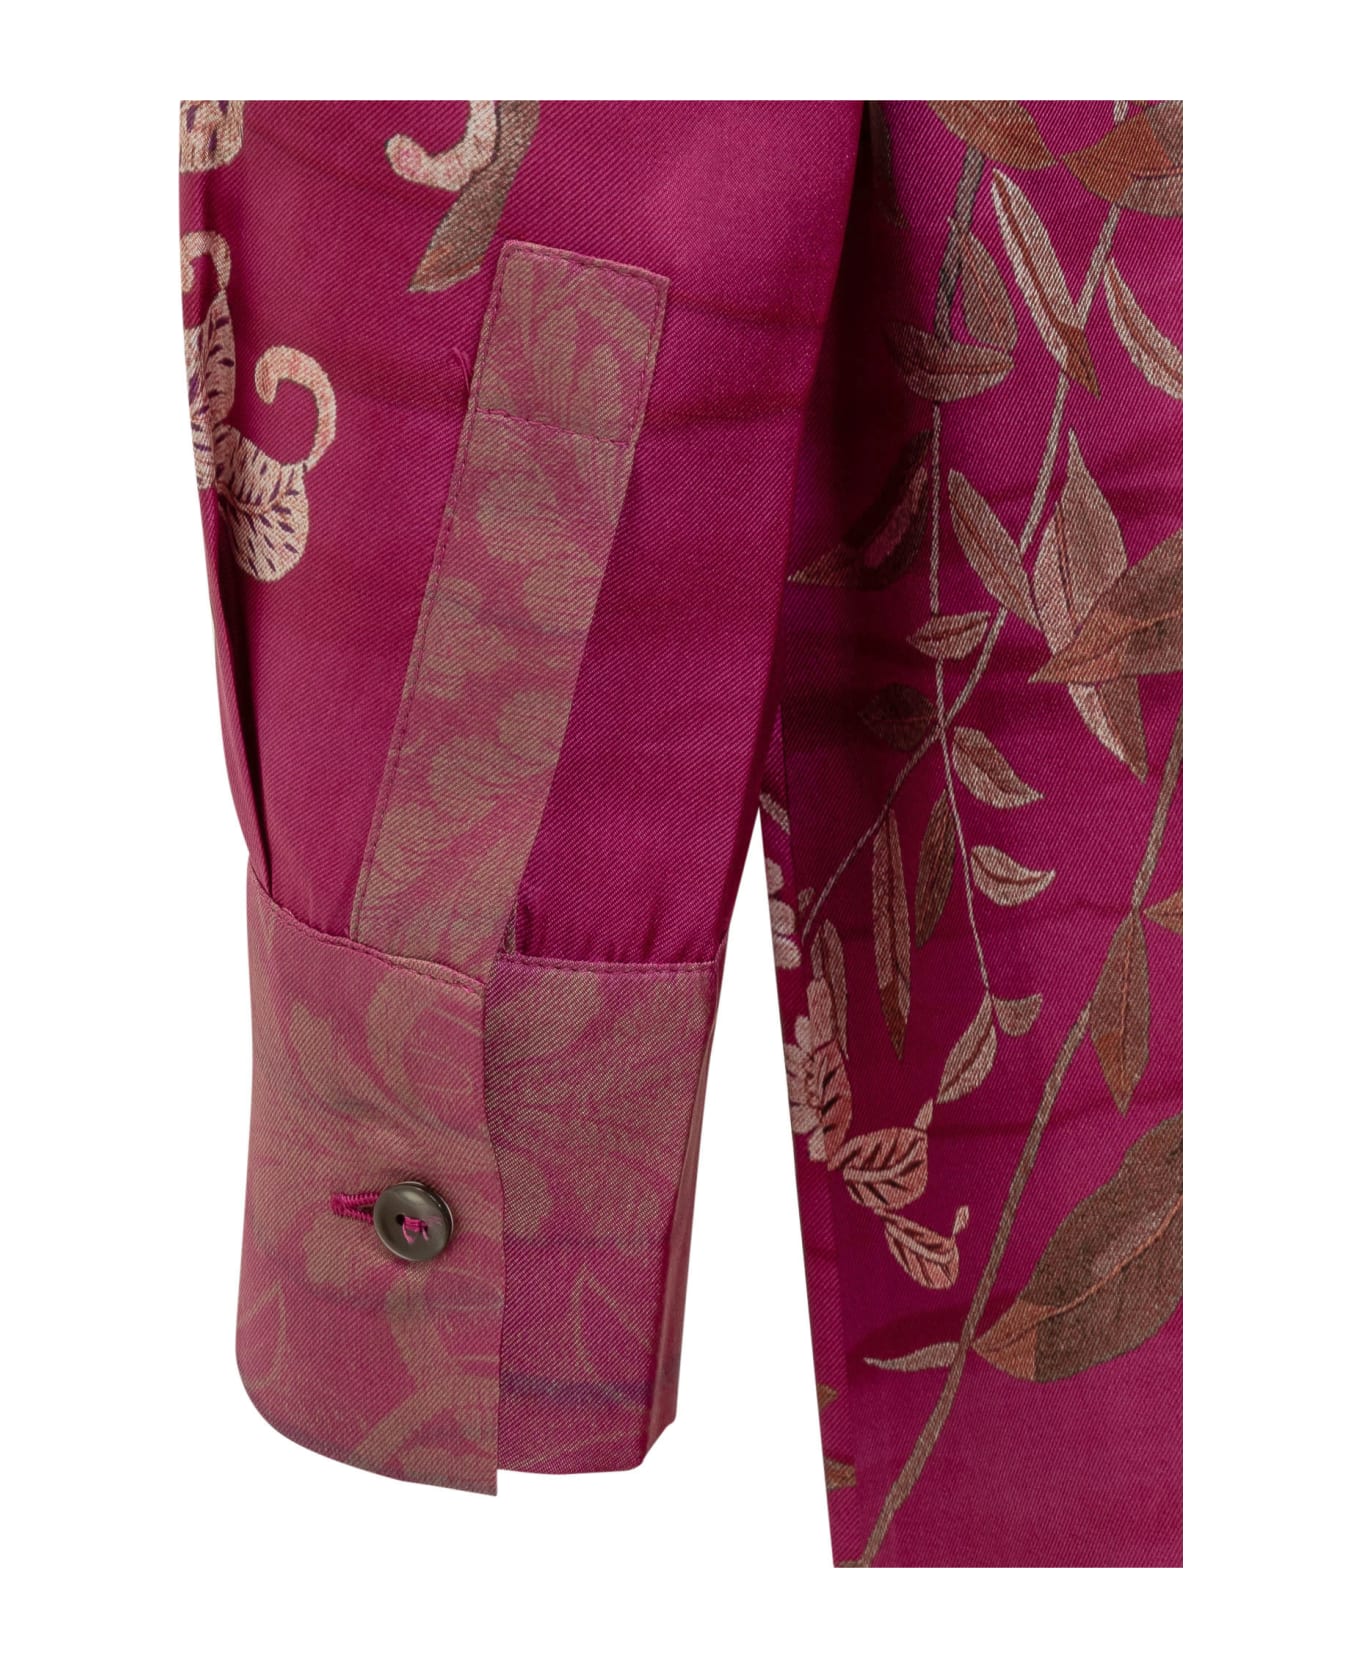 Pierre-Louis Mascia Silk Dress With Floral Pattern - BORDEAUX MULTI